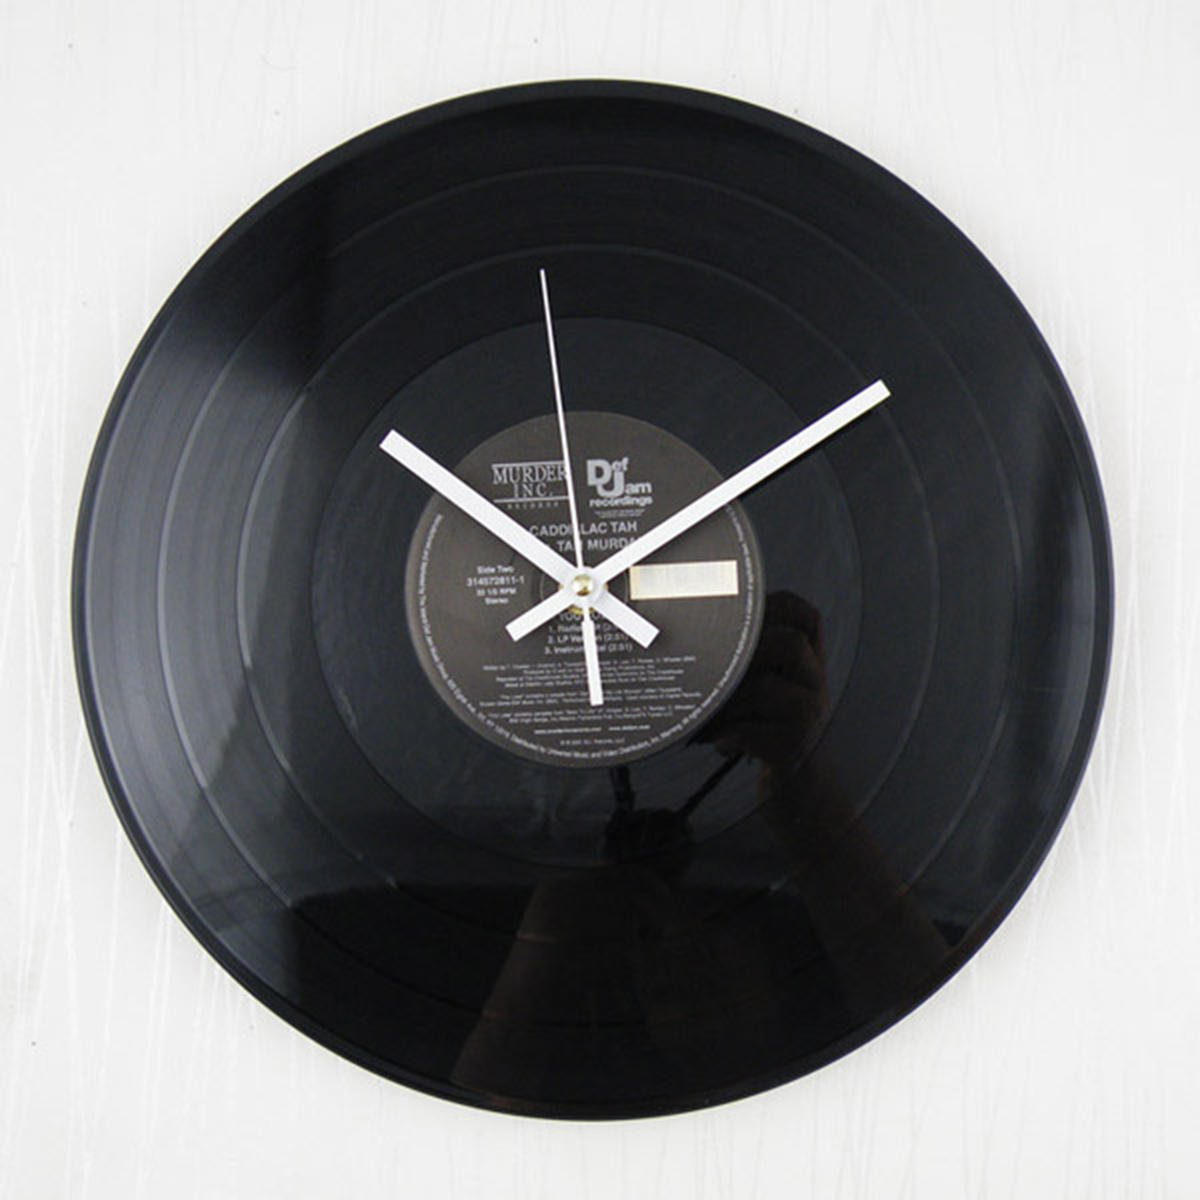 12 Inch Retro Classic Vinyl fonograaf Record Album wandklok Home Decor Gift